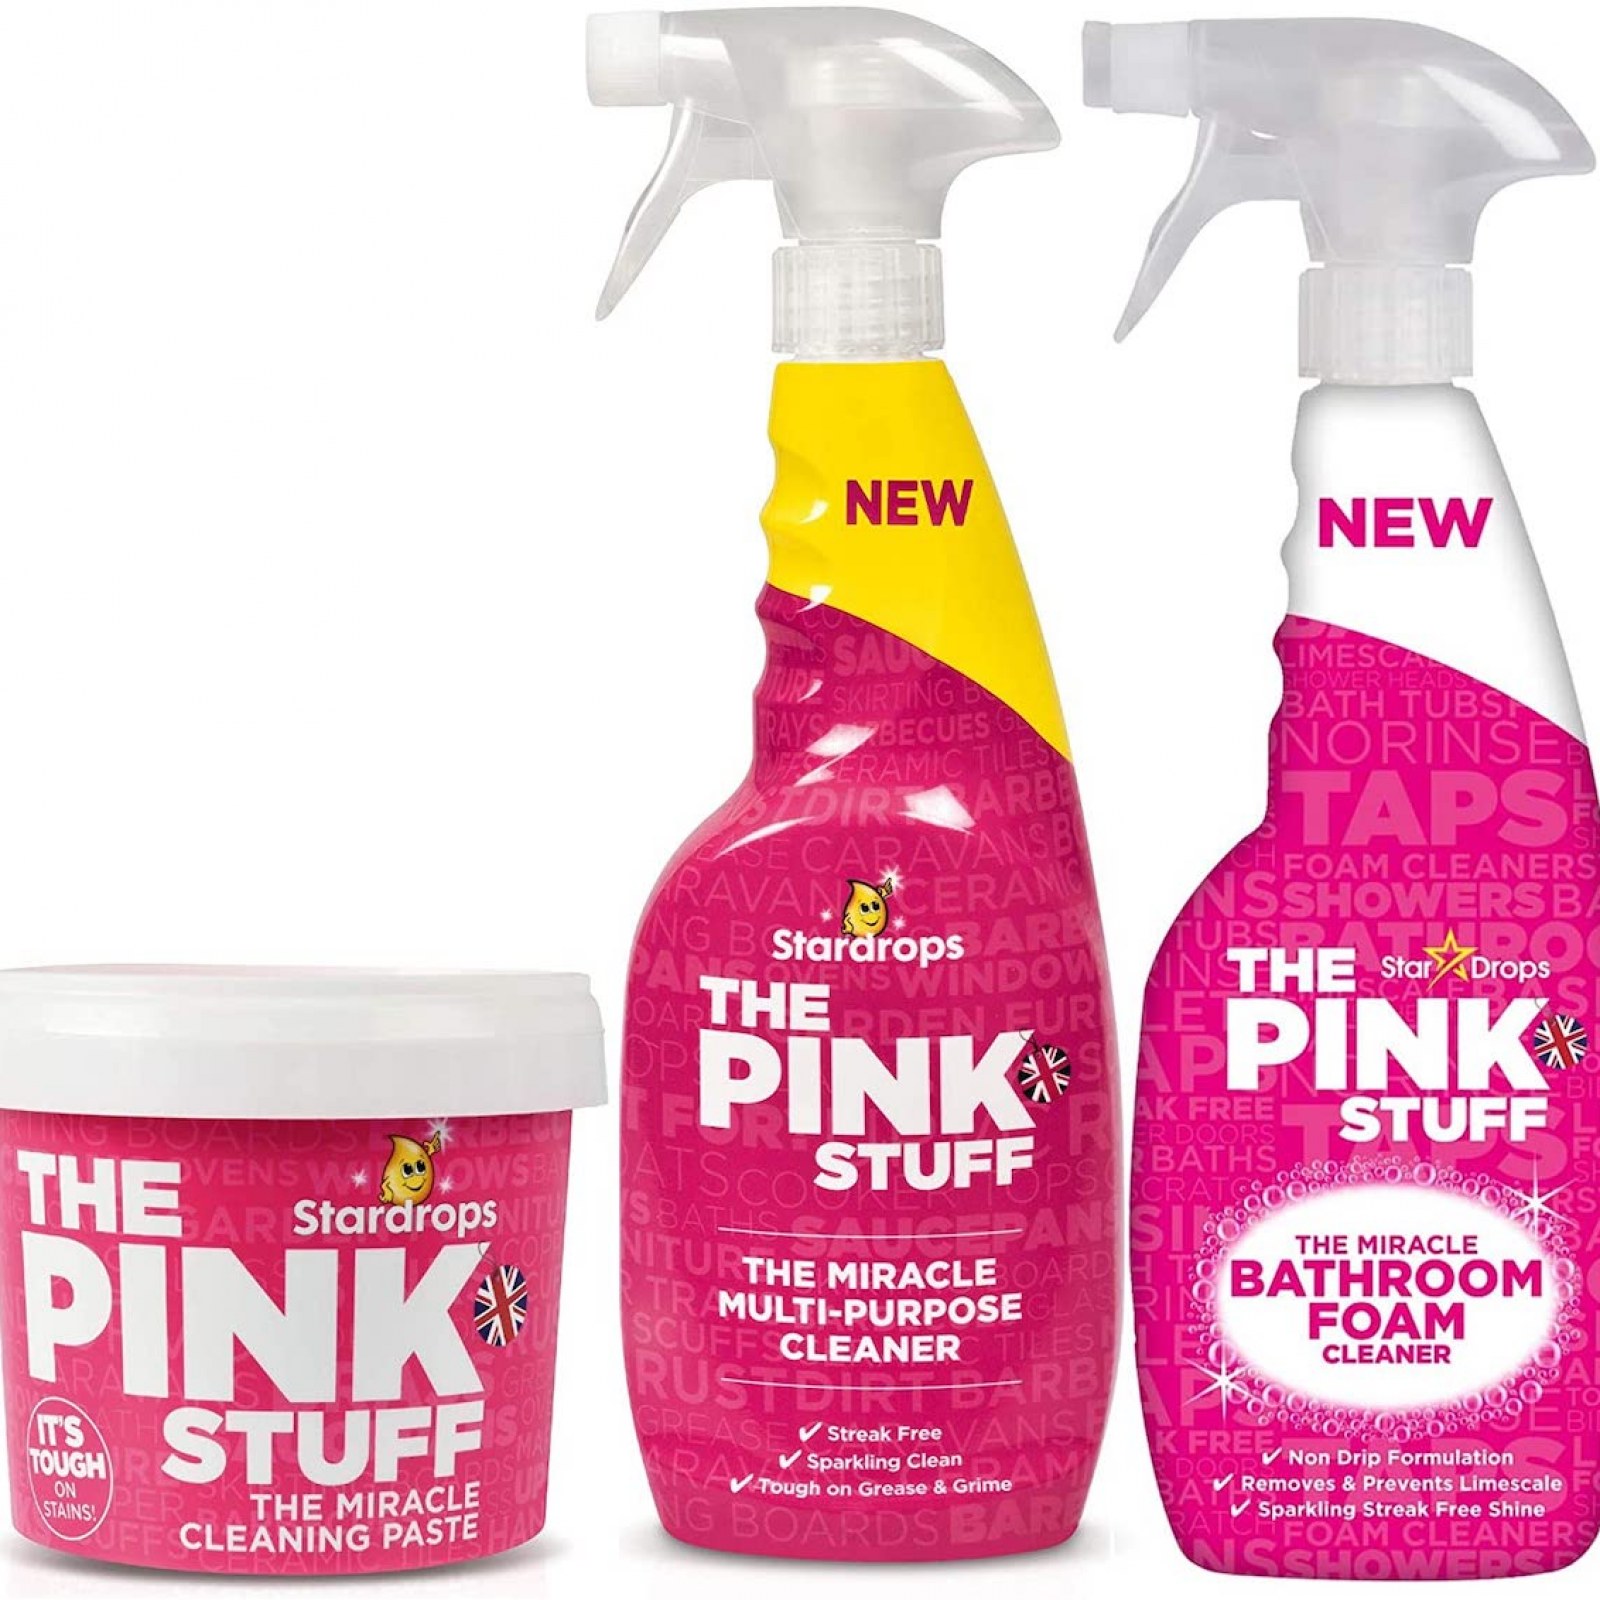 https://d.newsweek.com/en/full/1843987/best-cleaning-products-pink-stuff.jpg?w=1600&h=1600&q=88&f=2391e1f3c3ca55ee8f2ff179400b0ef3